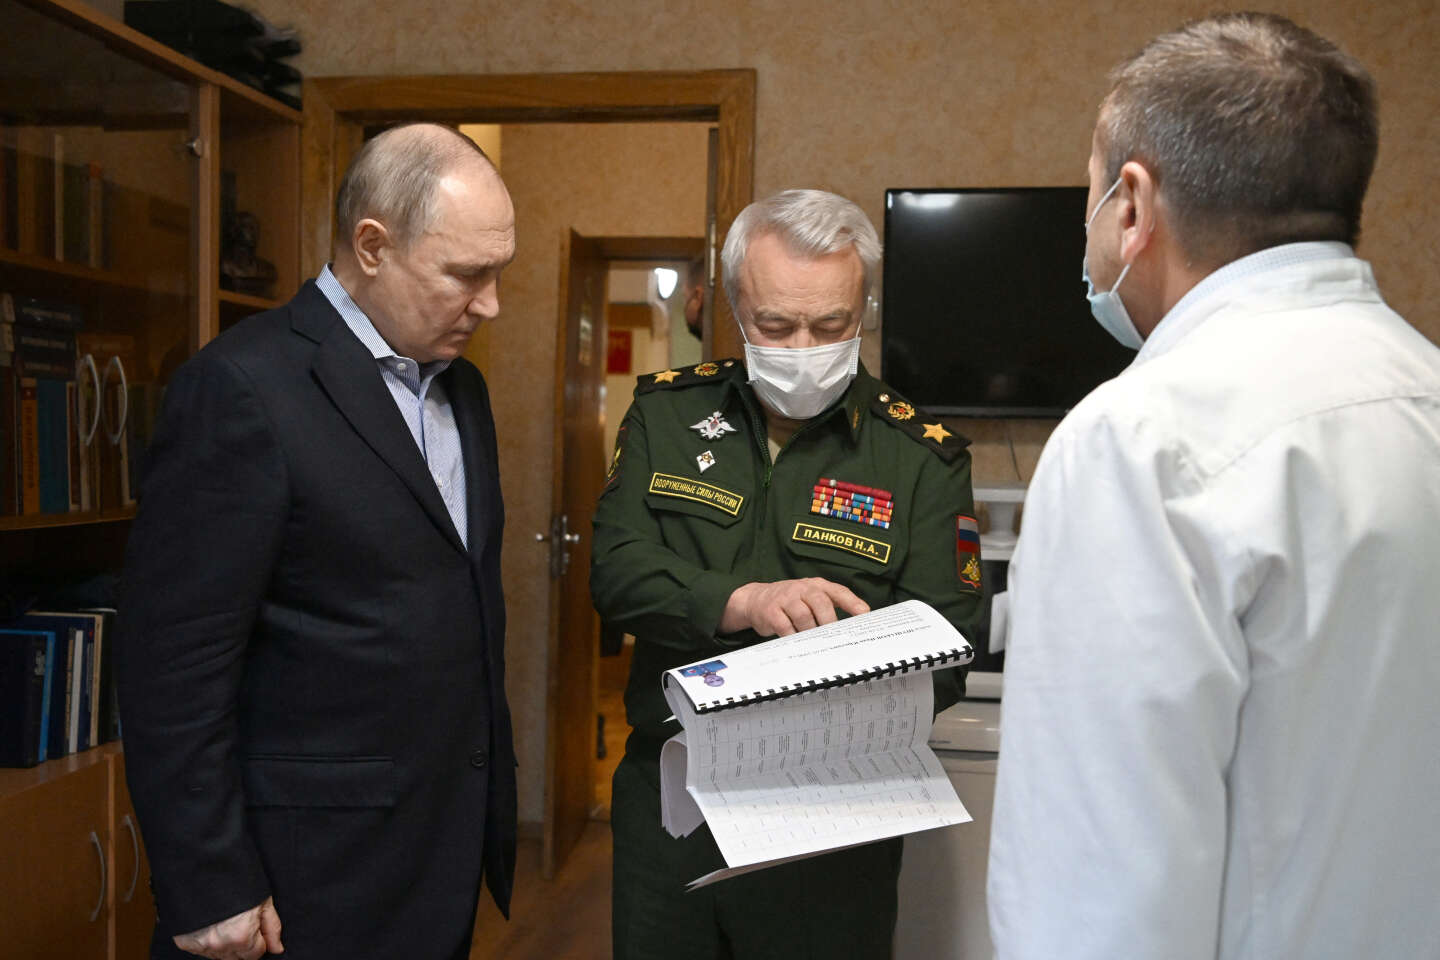 After the bombing of Belgorod, Vladimir Putin vowed to “intensify” attacks on Ukraine.